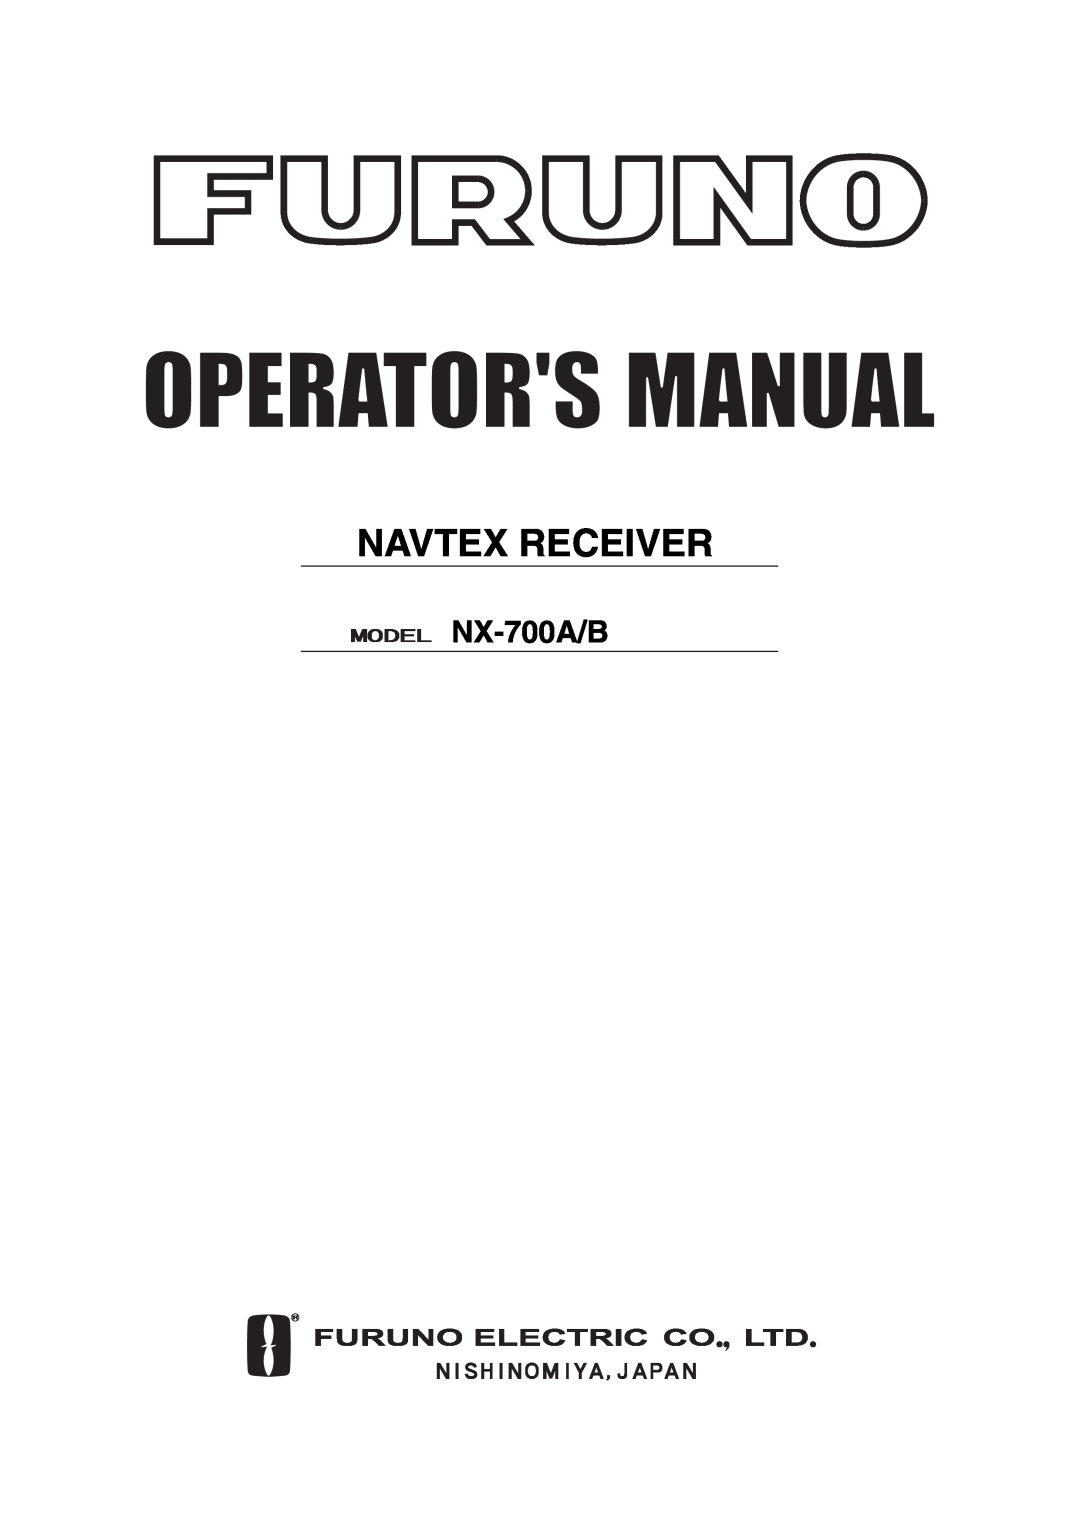 Furuno NX-700B manual Navtex Receiver, NX-700A/B 